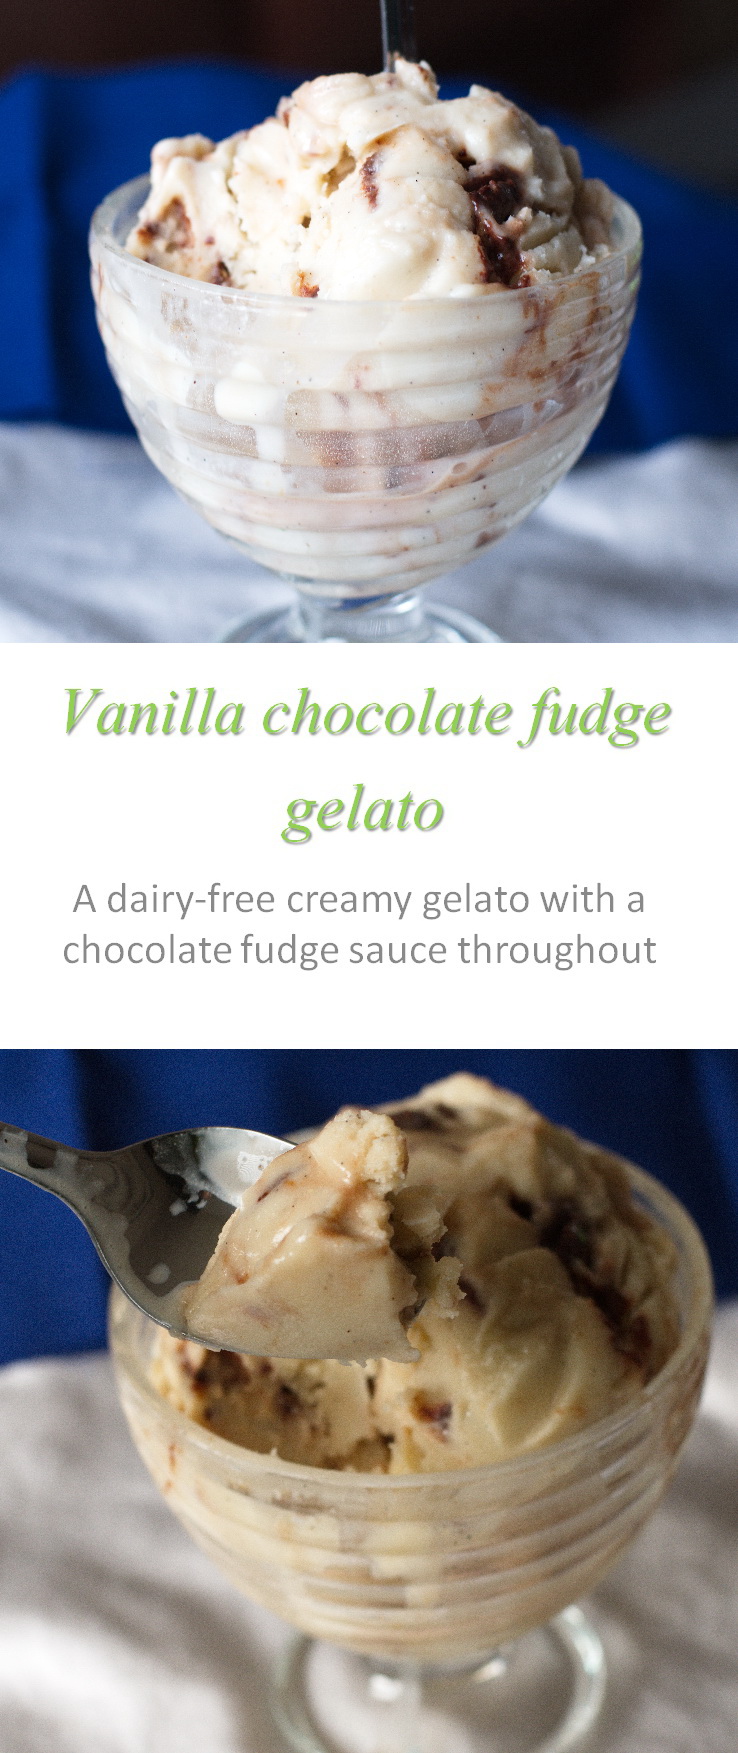 This dairy-free vanilla chocolate fudge swirl gelato is tasty and creamy with a yummy chocolate fudge swirl throughout. #gelato